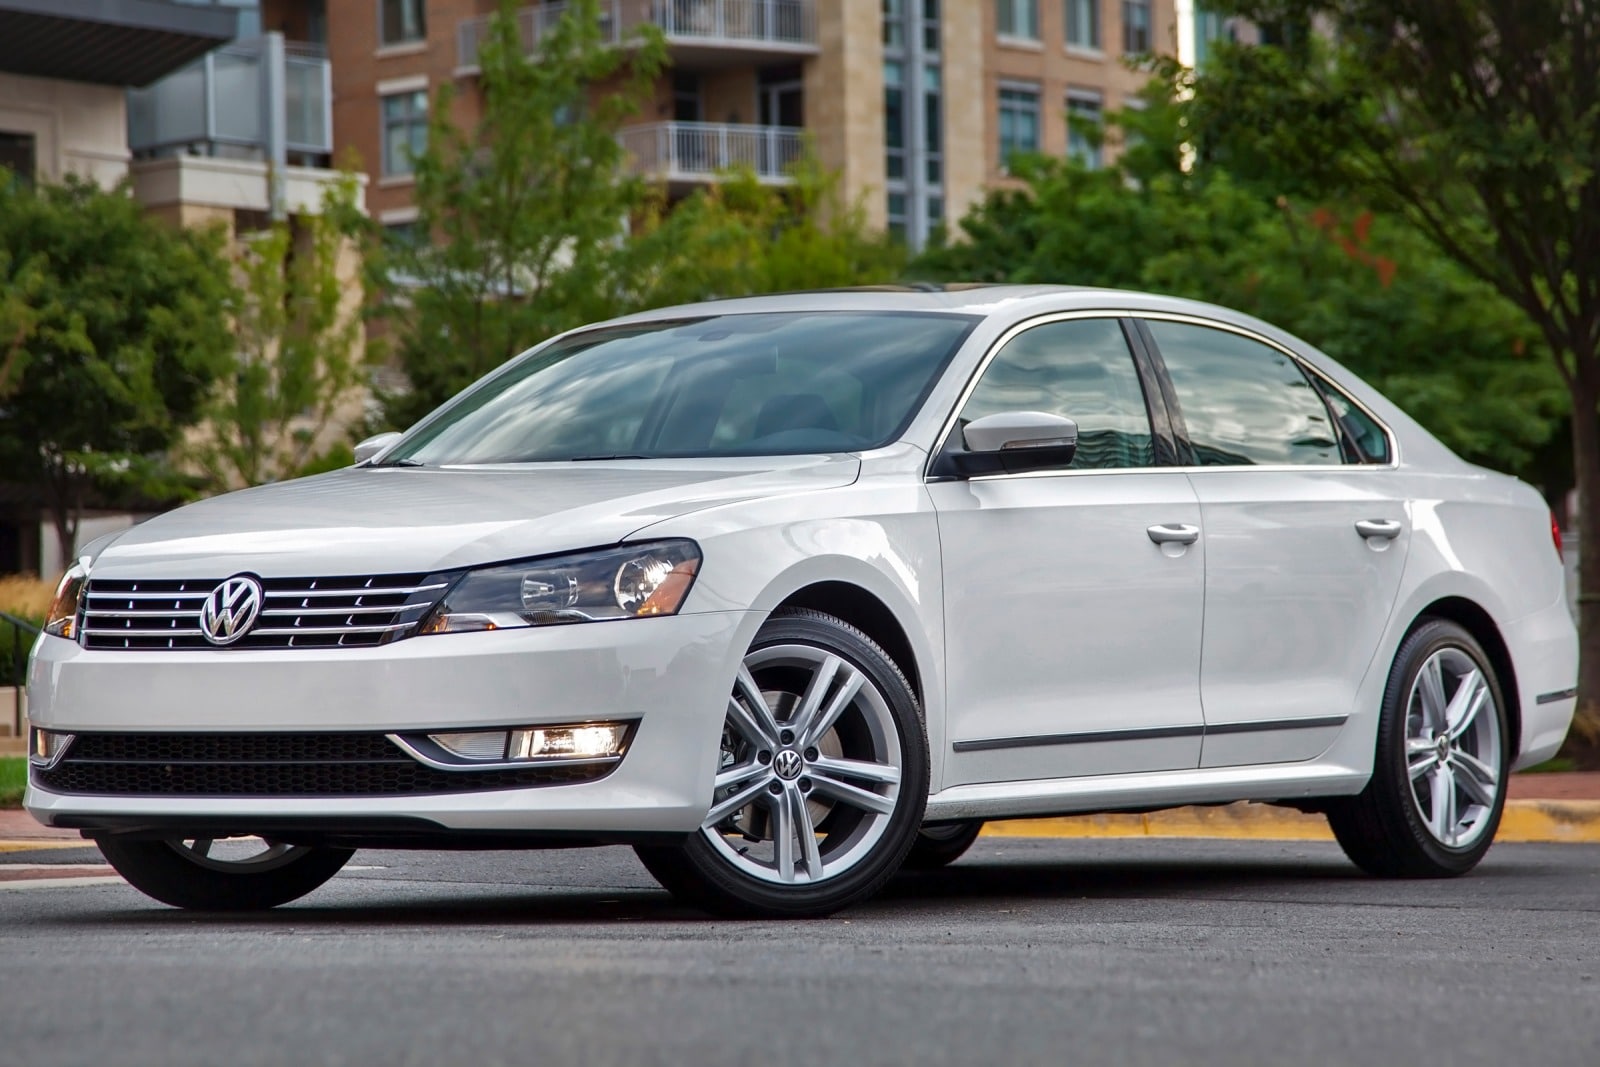 2015 Volkswagen Passat Review & Ratings | Edmunds